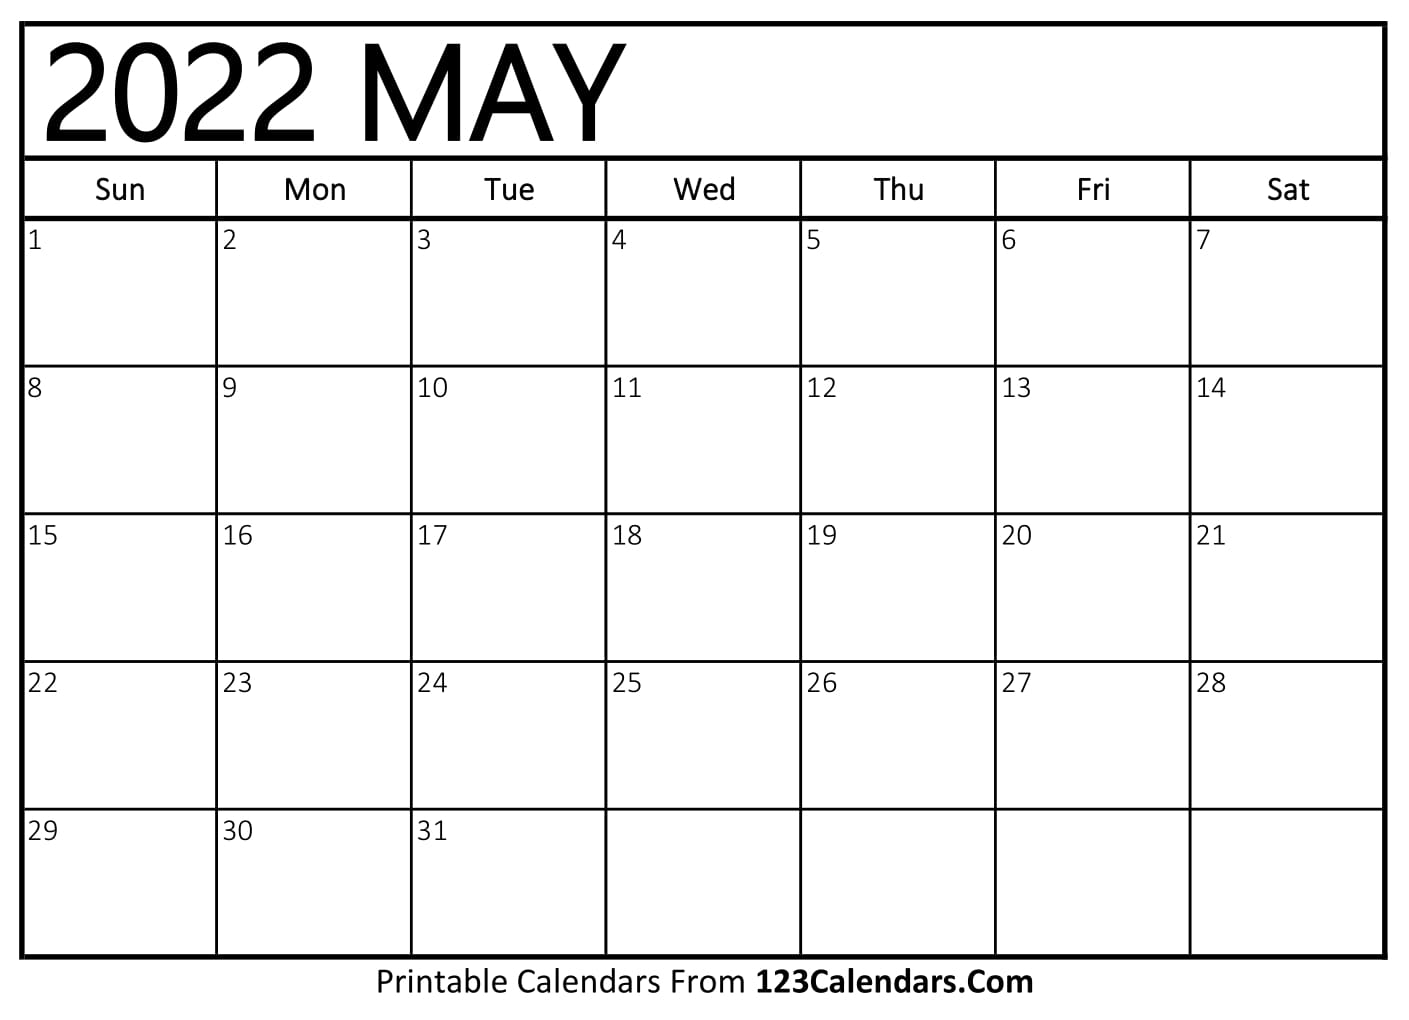 May 2022 Calendar Blank Printable May 2022 Calendar Templates - 123Calendars.com